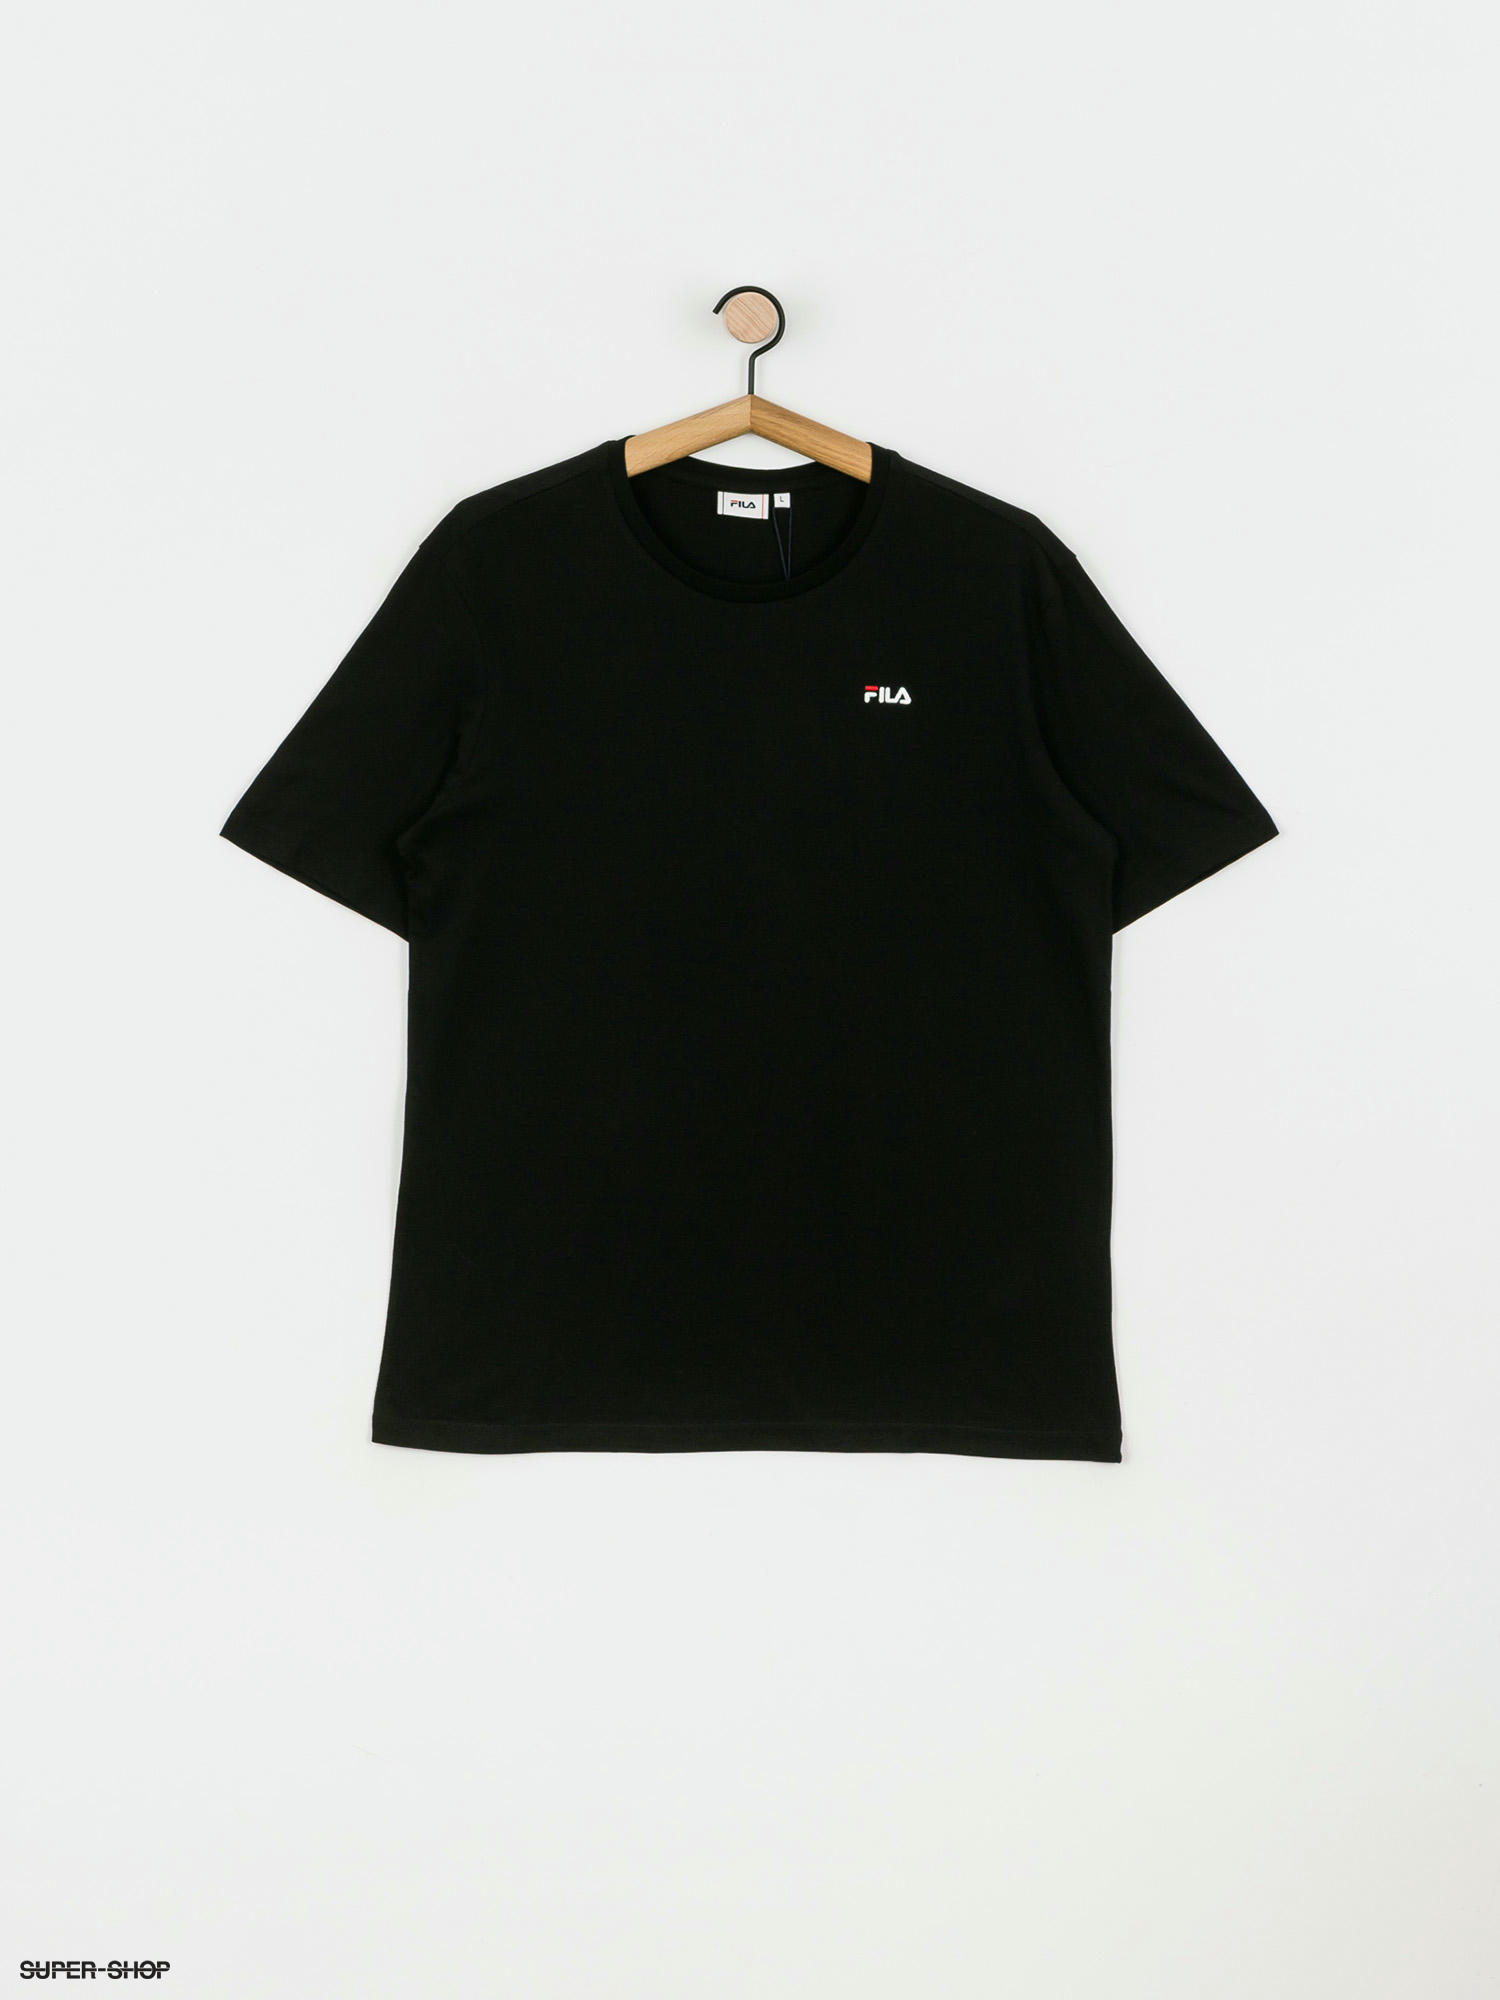 fila shirt black